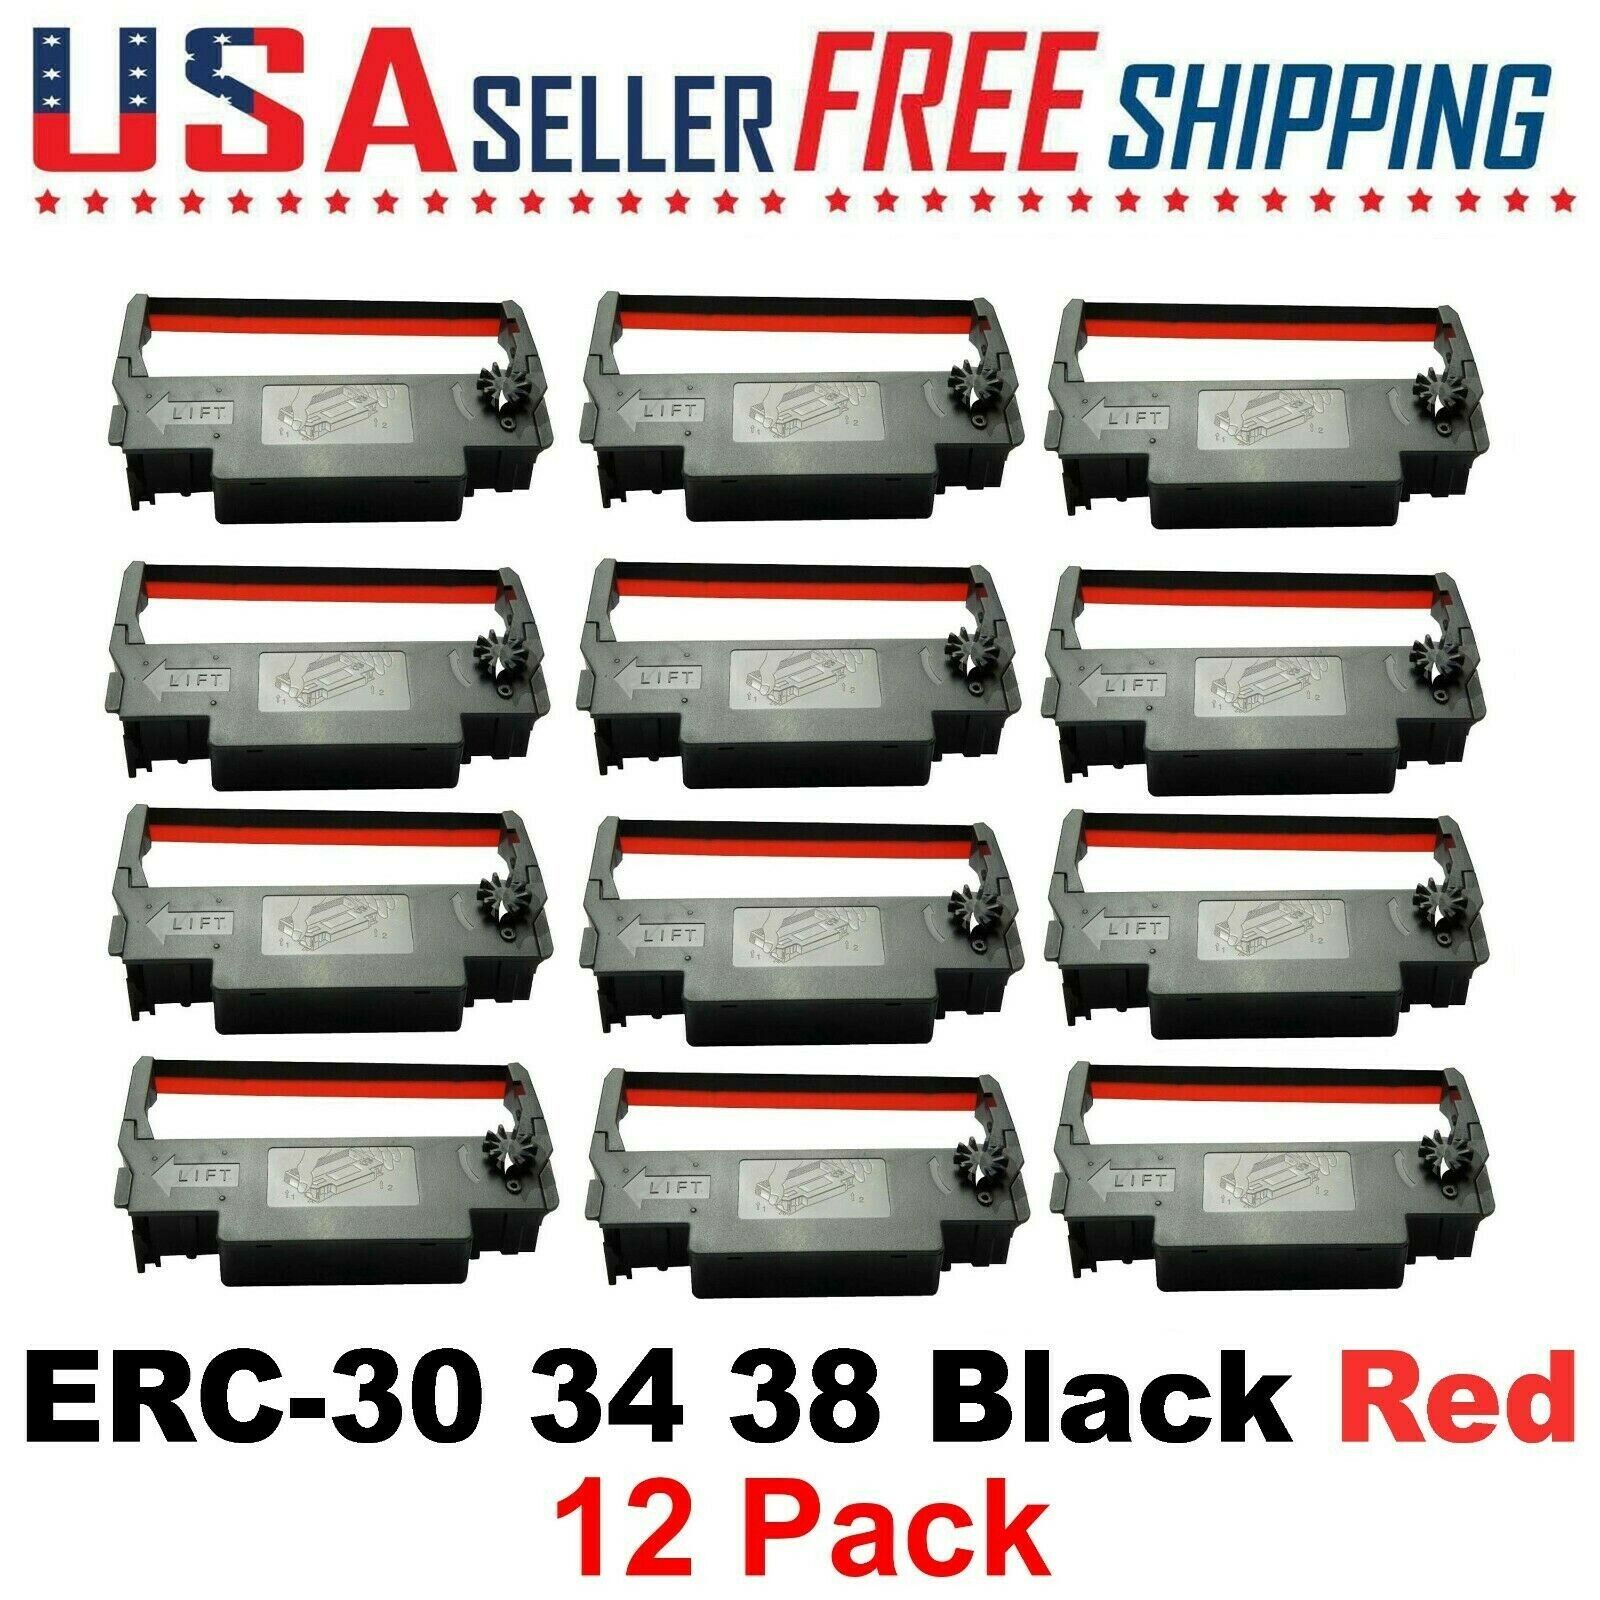 (12) EPSON ERC 30 / 34 / 38 BLACK & RED INK POS PRINTER RIBBONS  ~FREE SHIPPING~